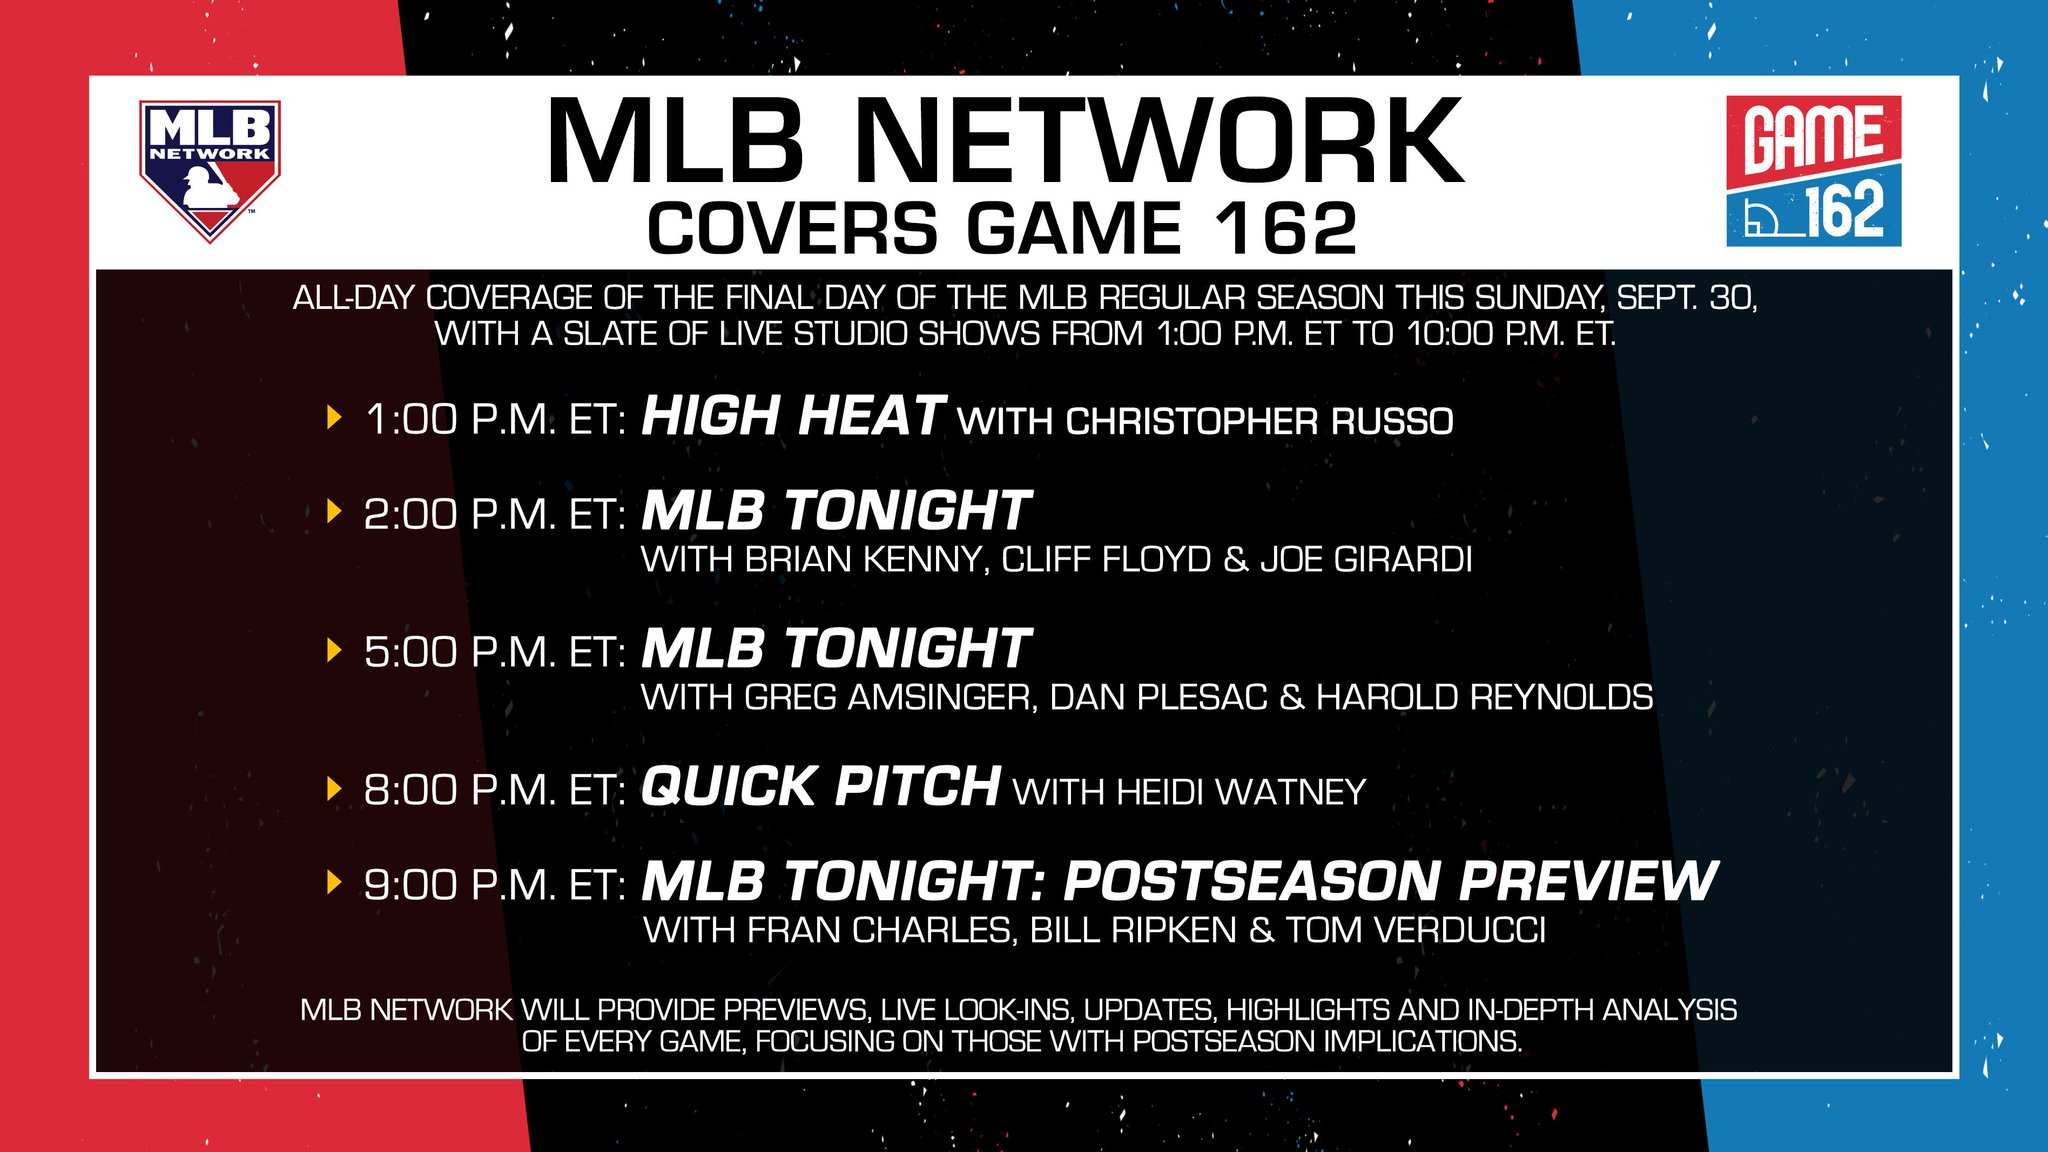 MLB Network PR on Twitter ".@MLBNetwork’s coverage of Game 162 begins